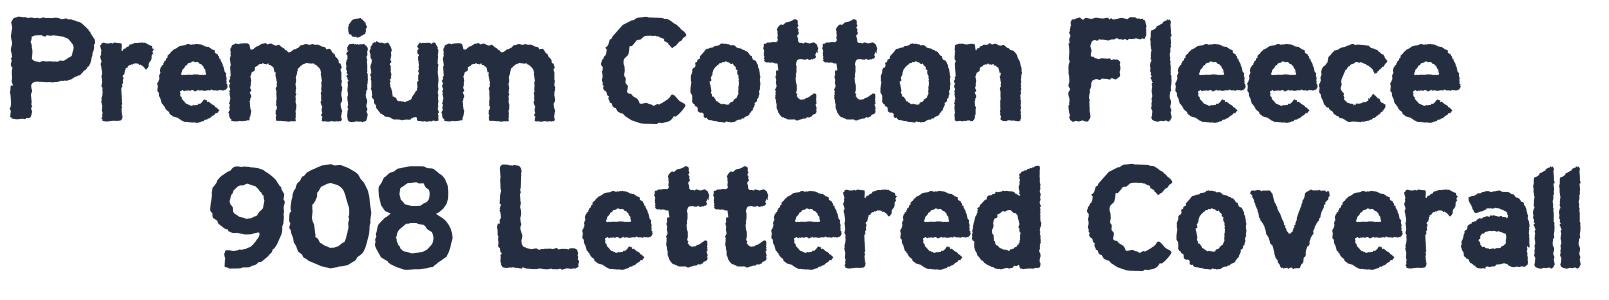 Premium Cotton Fleece 908 Lettered Coverall